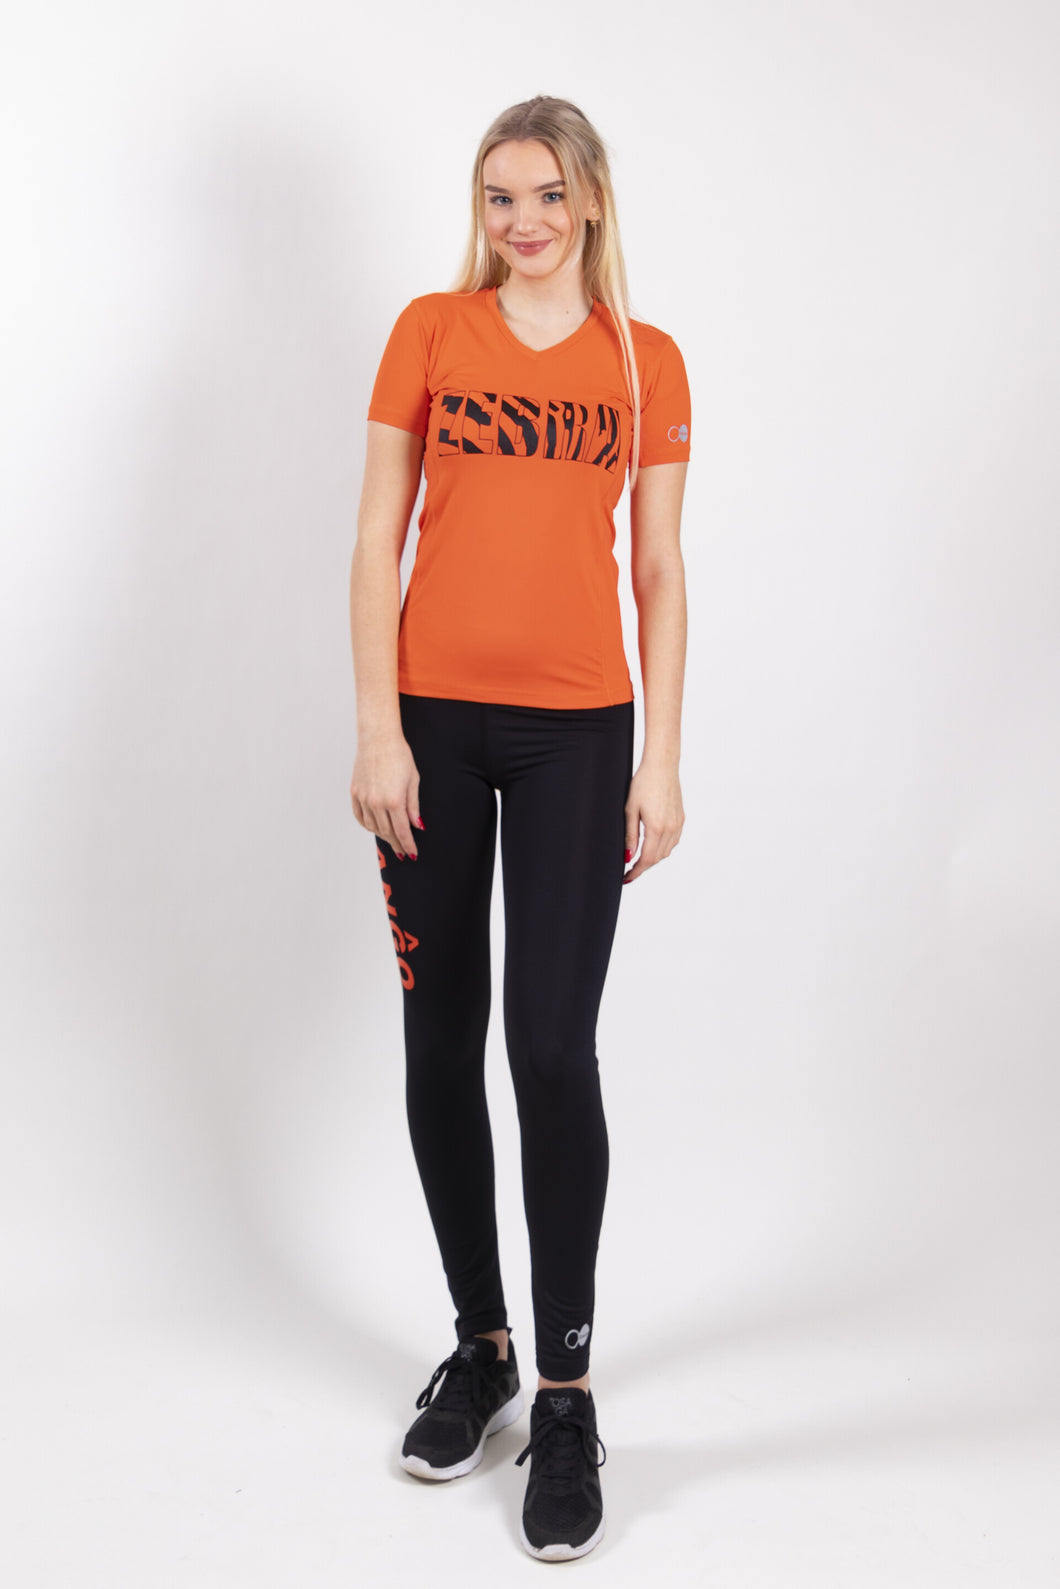 Orango Running - Womens T-shirt short sleeve V-neck - Cherry Tomato - P010-201A